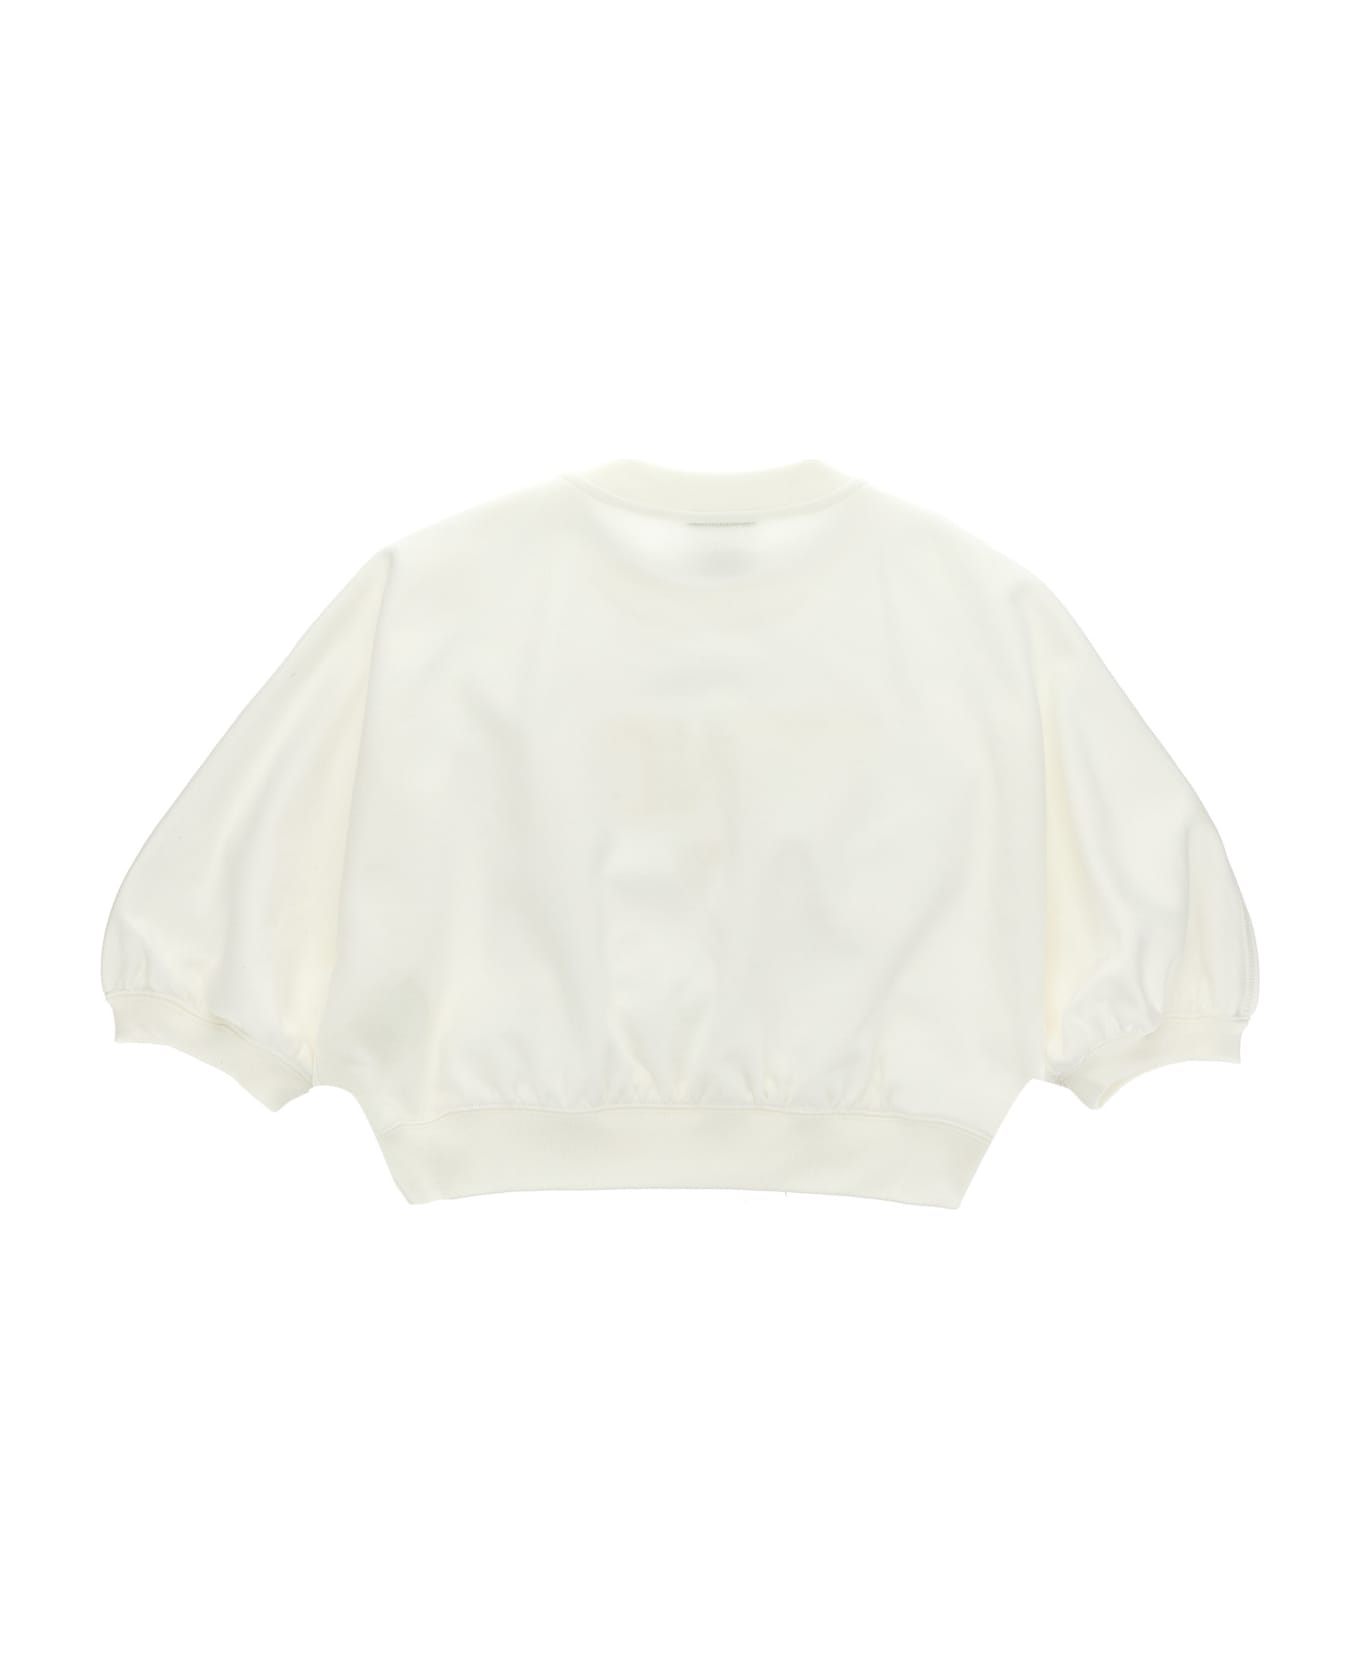 Fendi Logo Sweatshirt - White